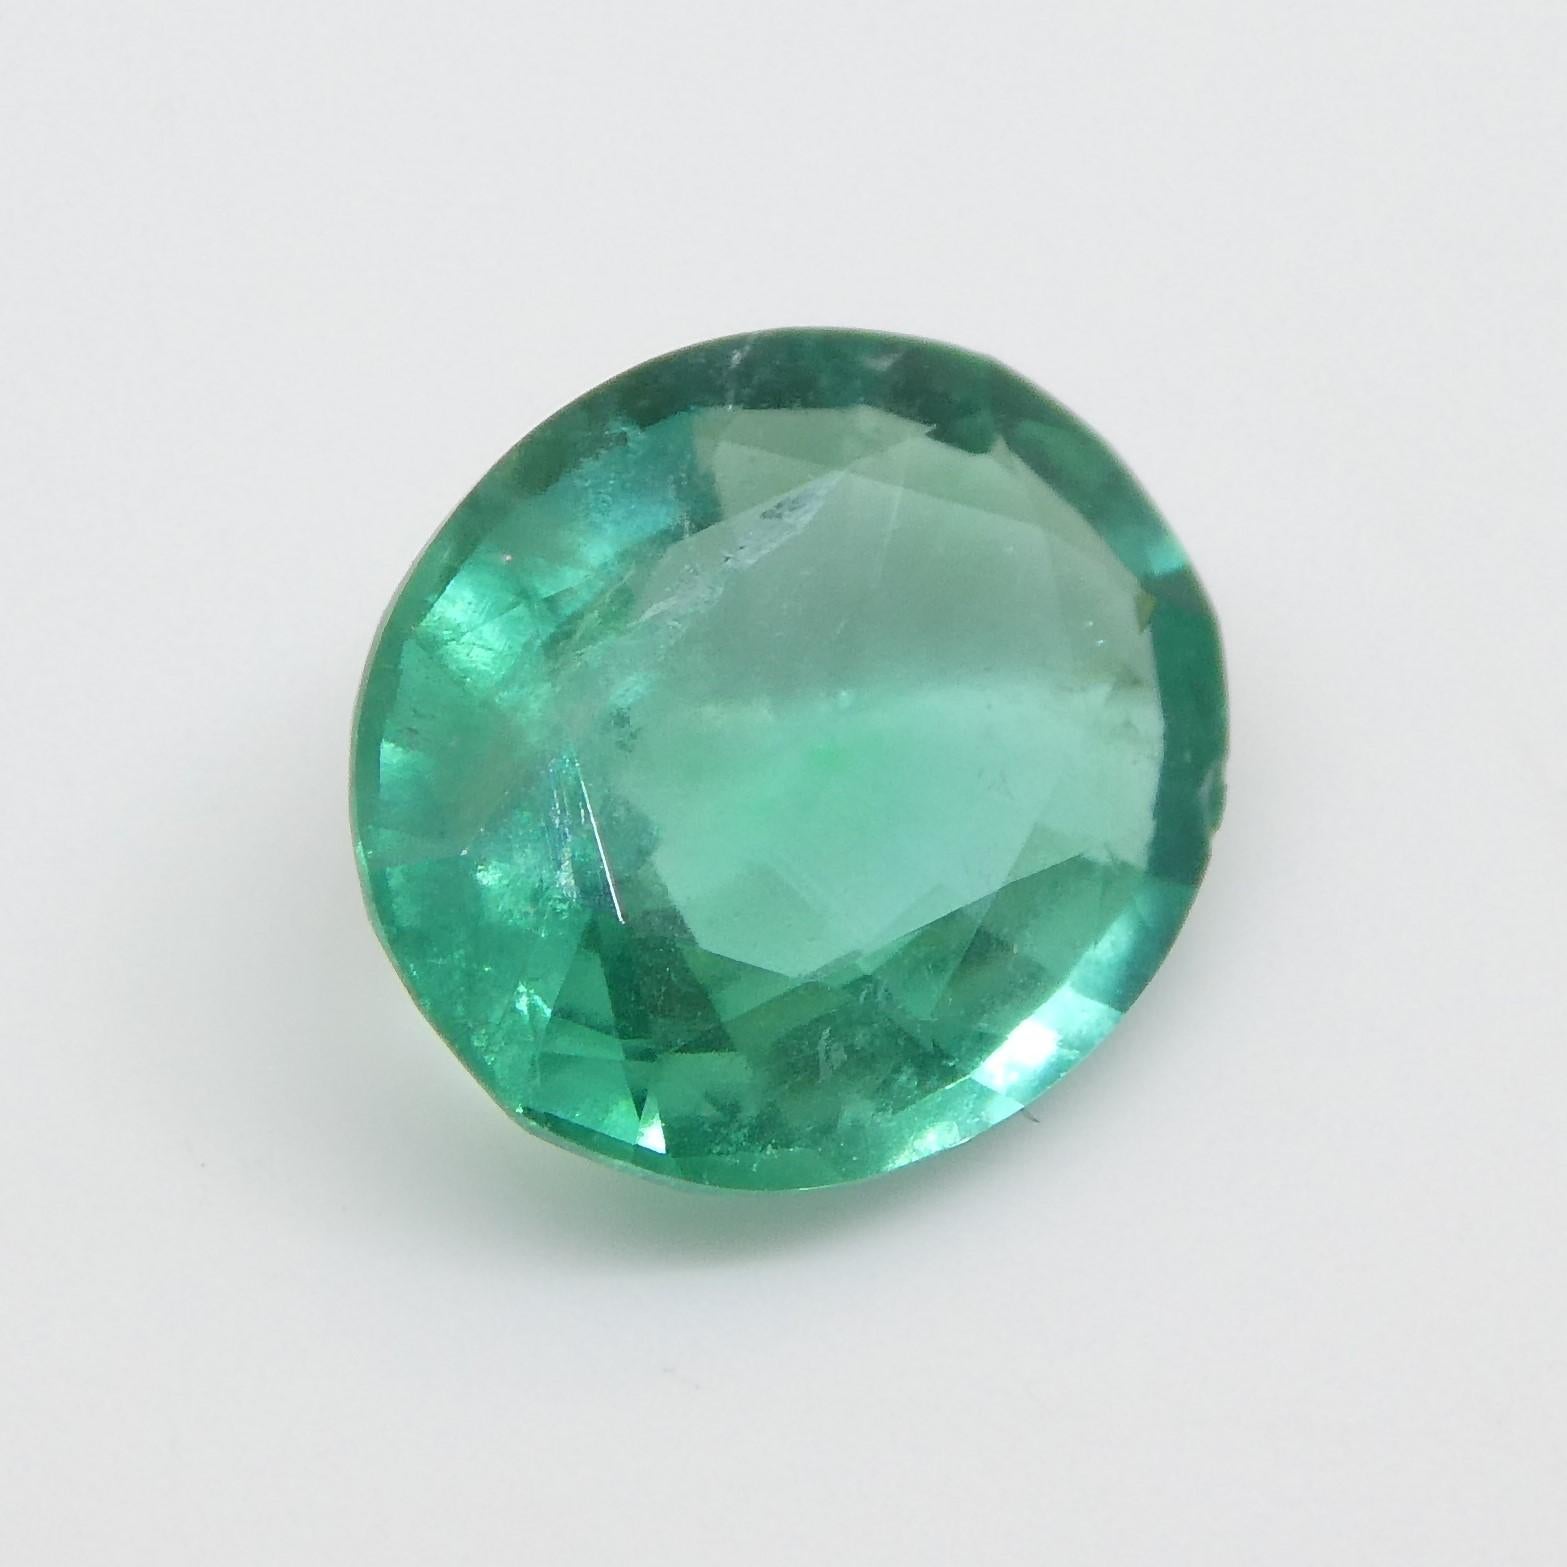 Brilliant Cut 1.11ct Oval Green Emerald from Zambia For Sale